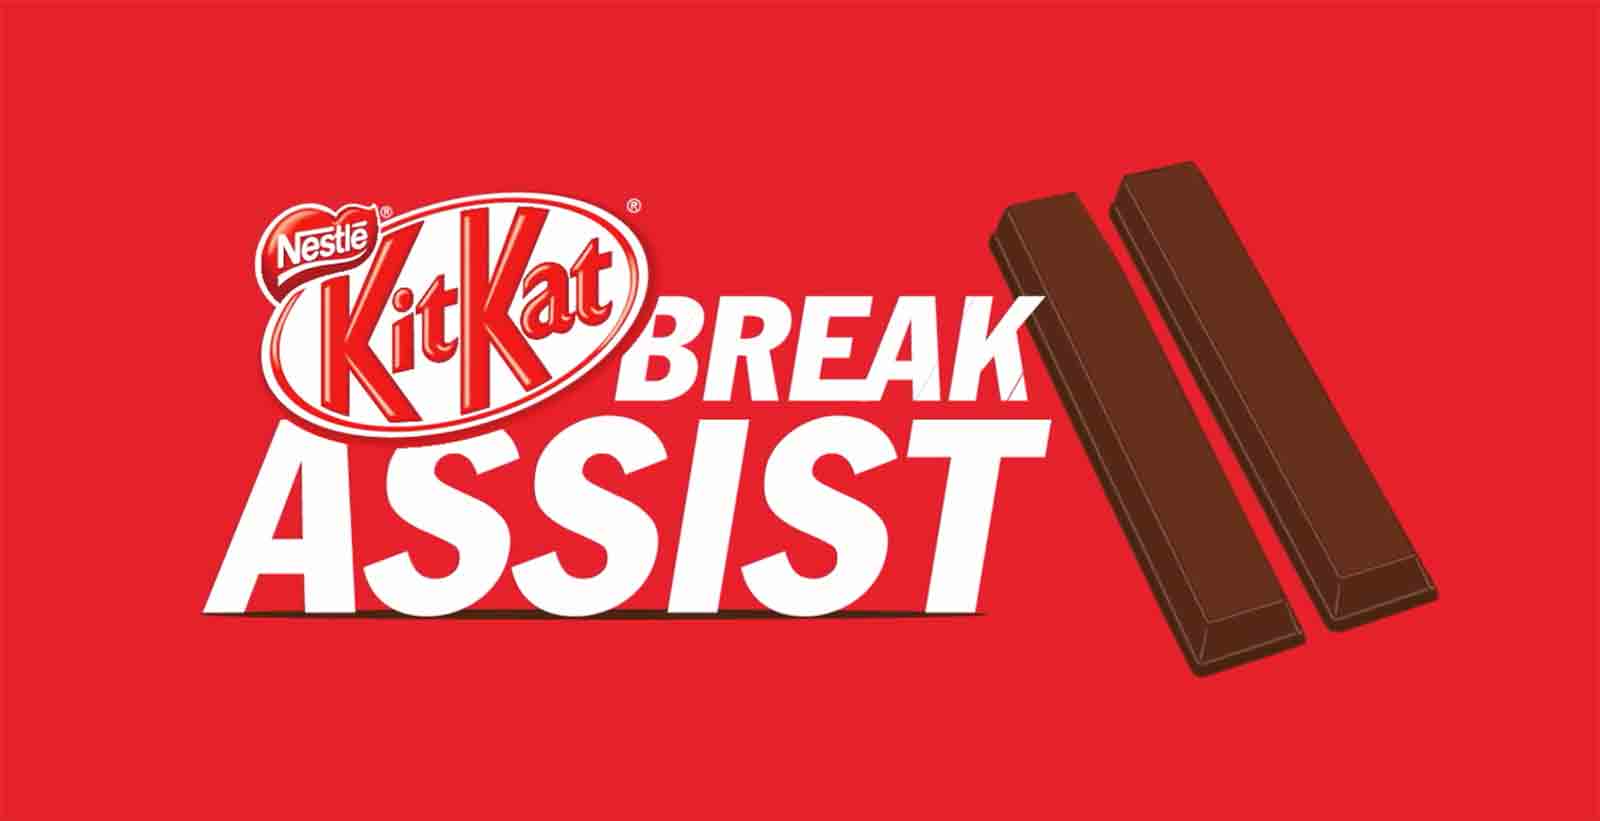 Nestlé Kit Kat Break - An Ad That Helps Skip Other